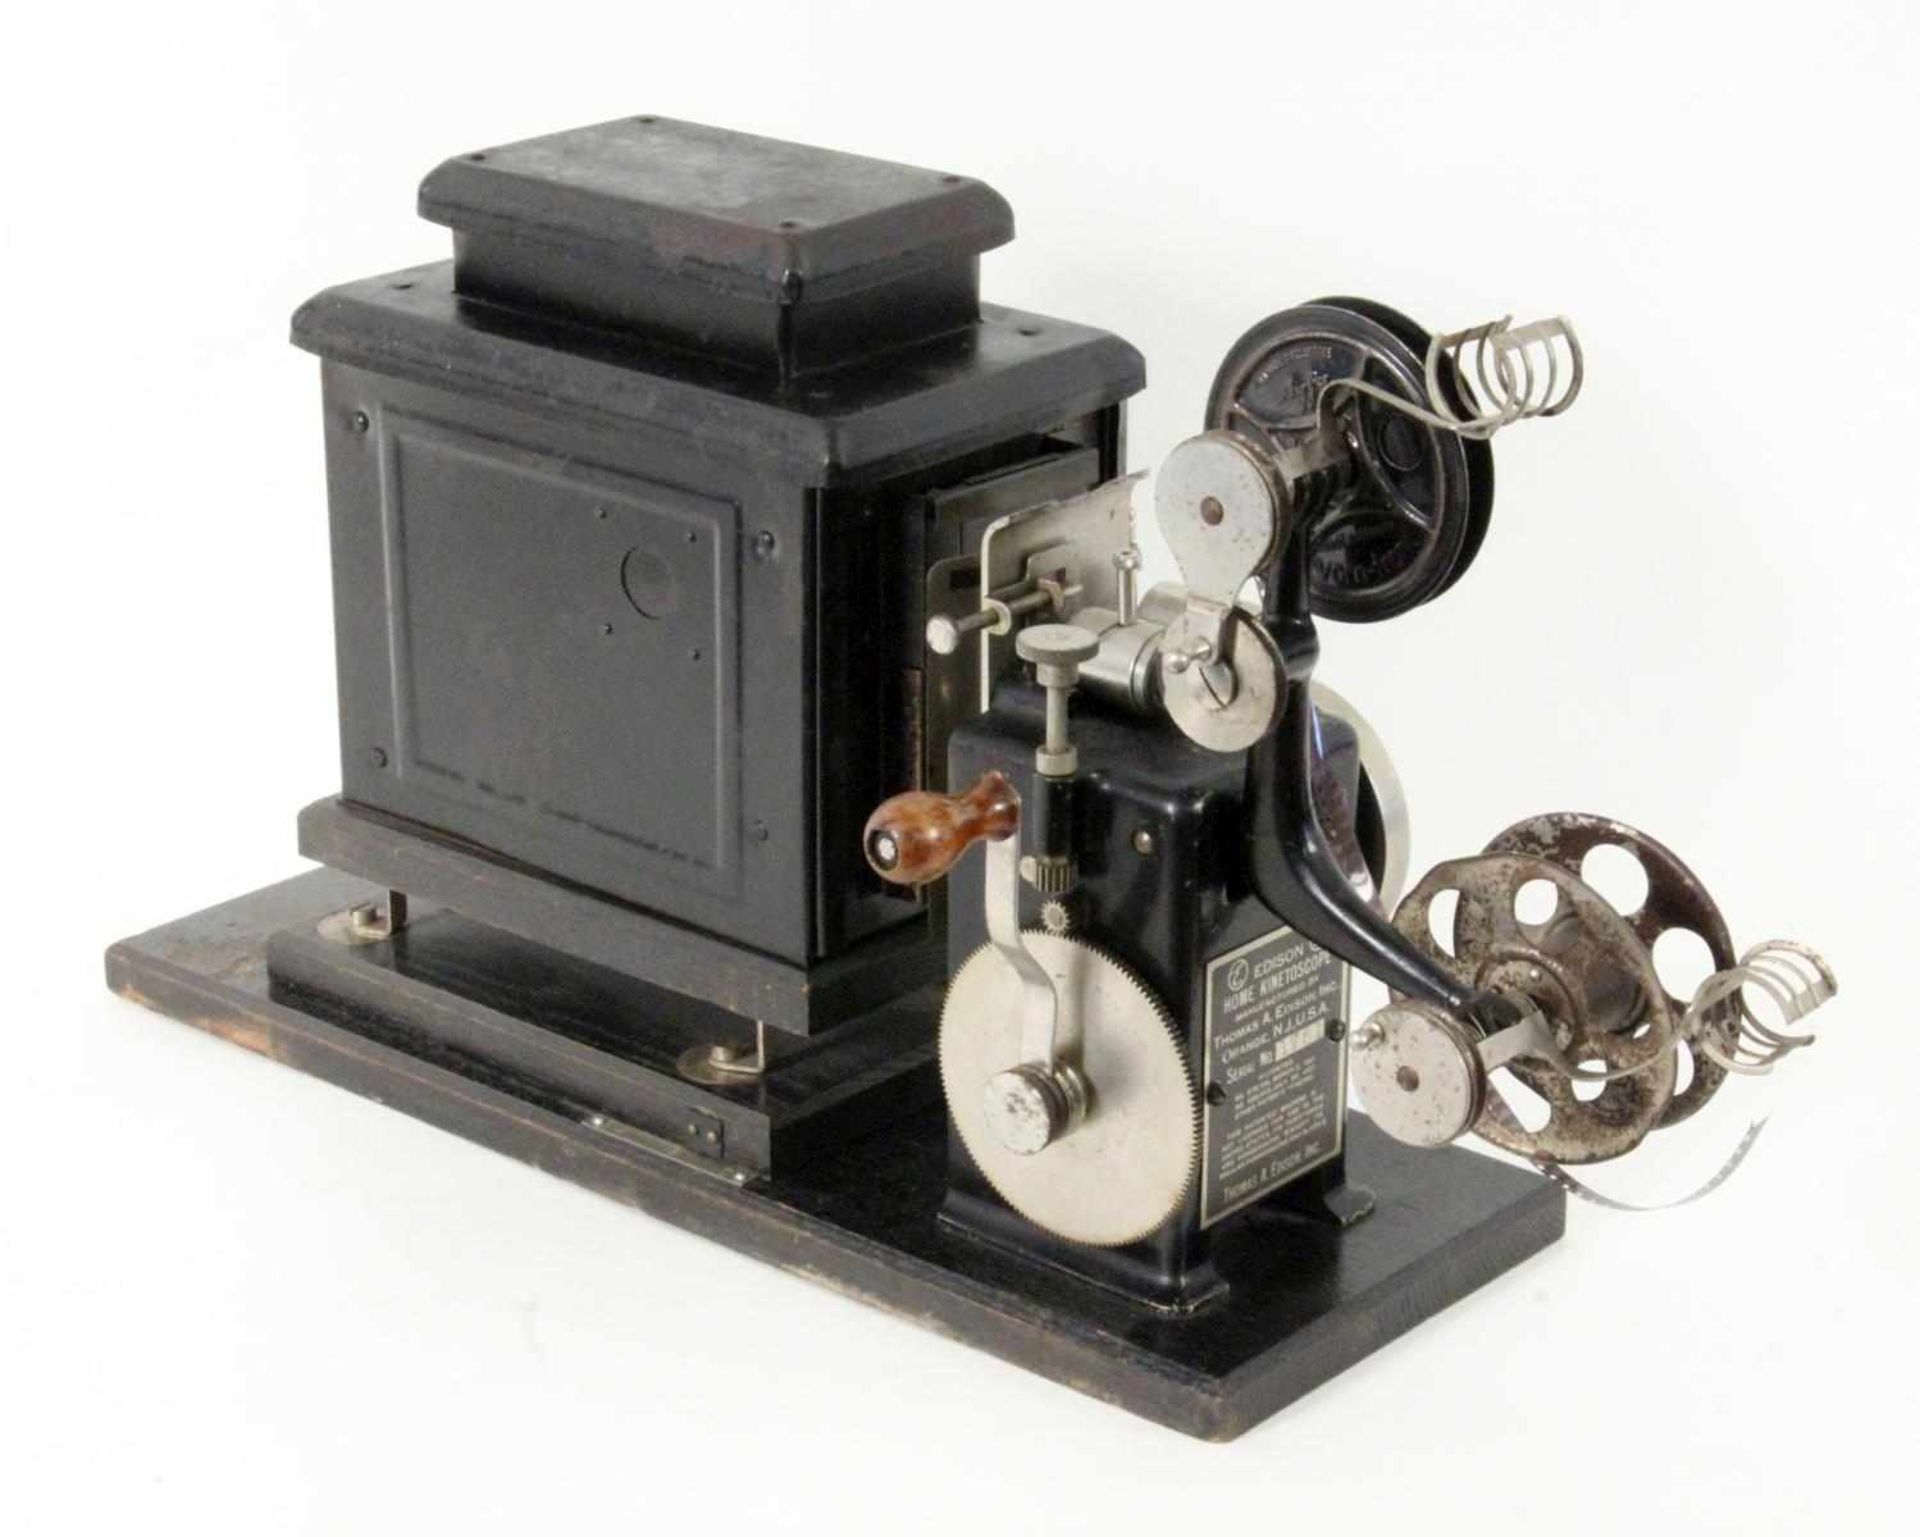 EDISON HOME KINETOSCOPE Thomas A. Edison Inc., Orange, NY, USA um 1912 22mm Filmprojektor, - Bild 3 aus 4